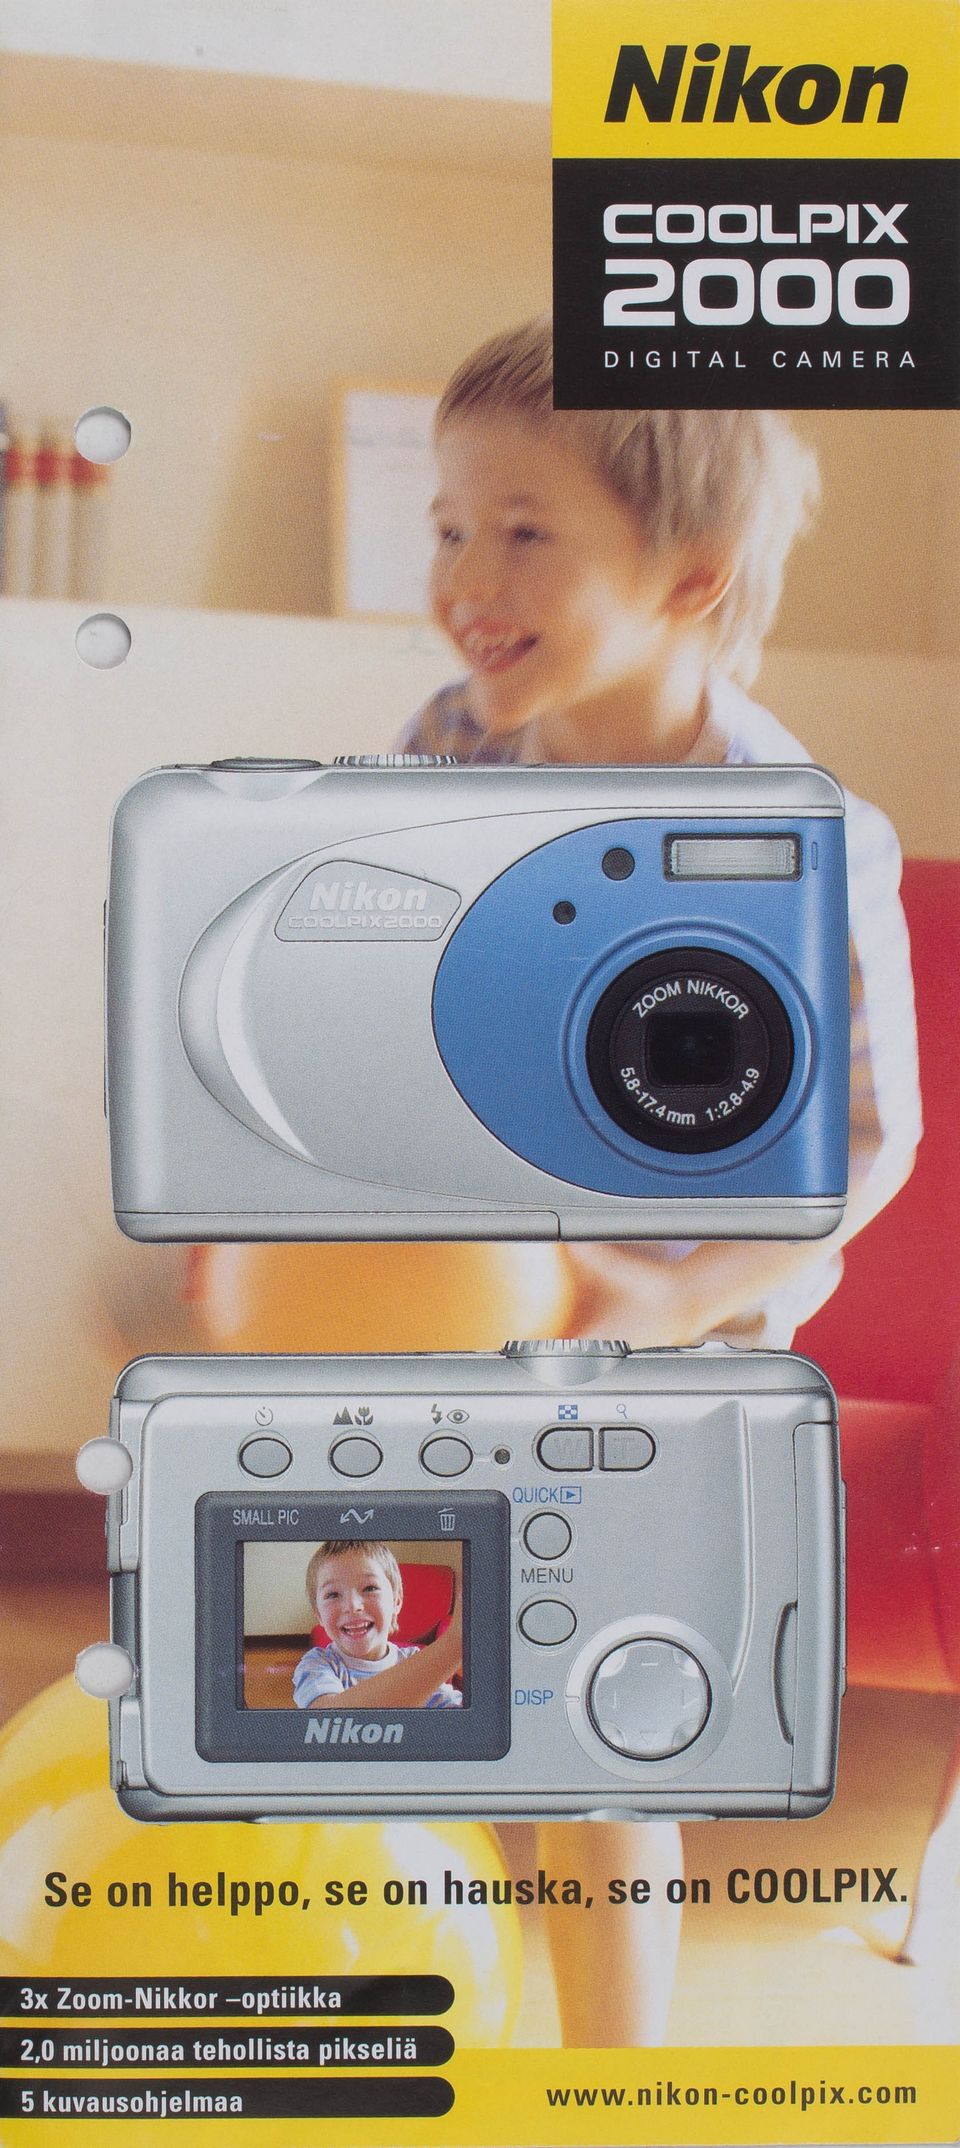 Nikon COOLPIX 2000